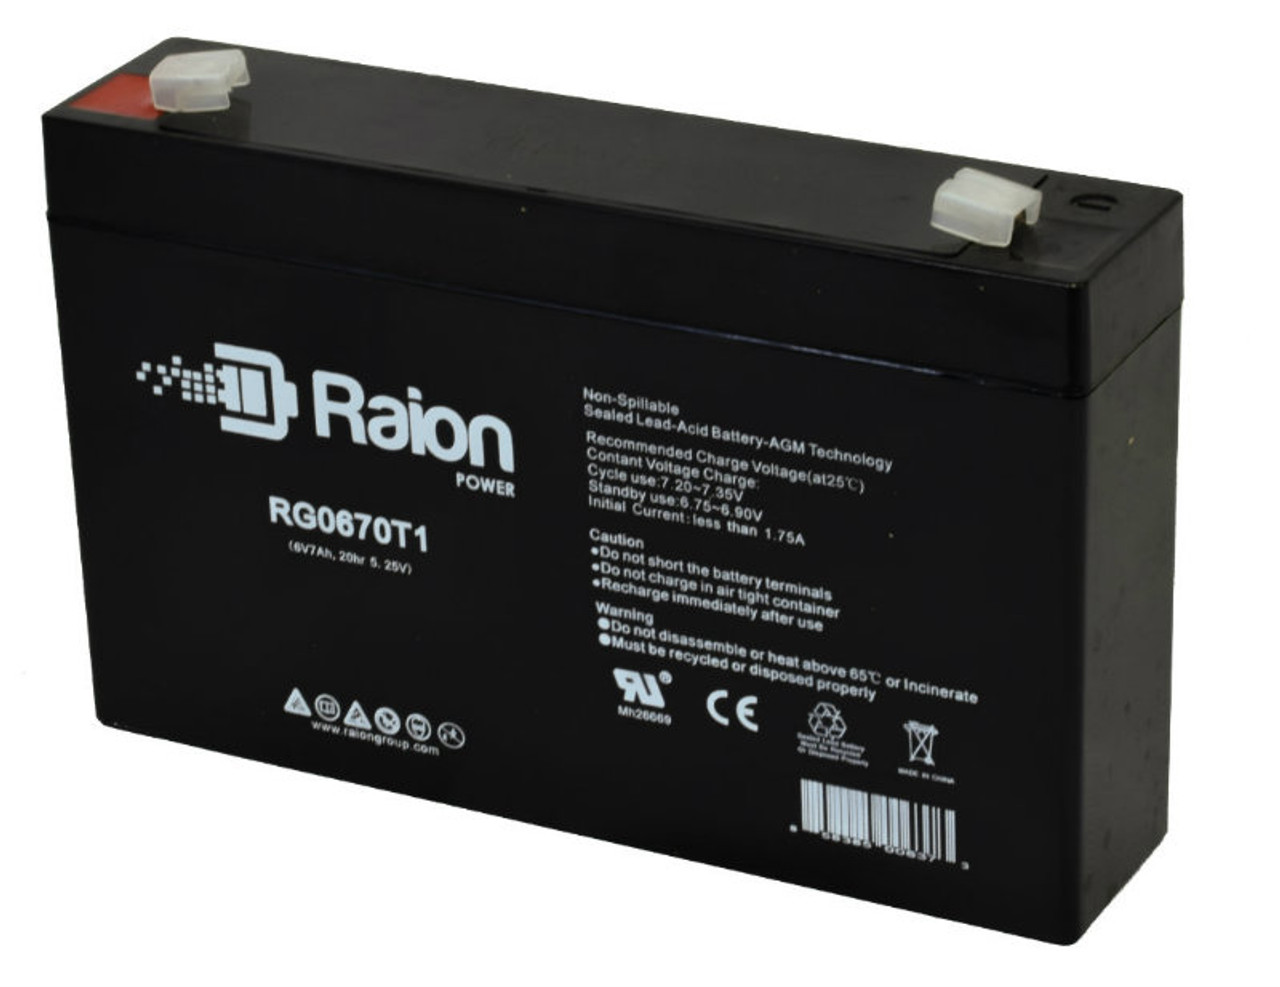 Raion Power RG0670T1 6V 7Ah Replacement Battery Cartridge for SBB 3FM7.5